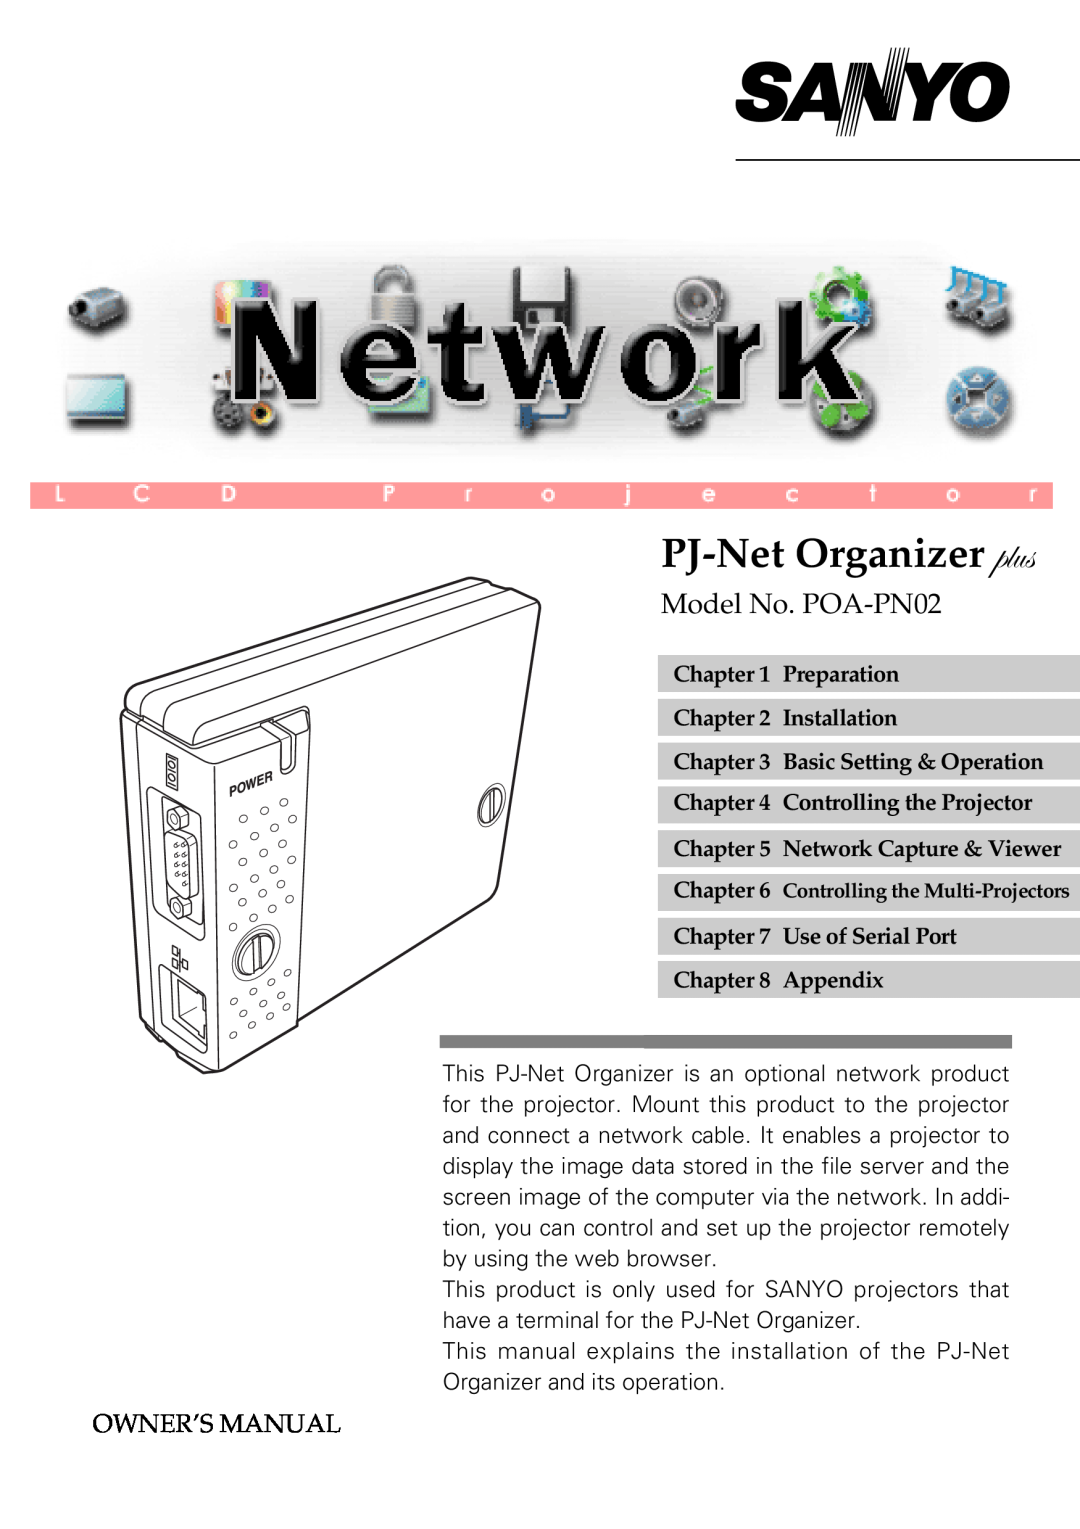 Sanyo owner manual Model No. POA-PN02, Owner’S Manual, PJ-Net Organizer plus, Preparation Installation 